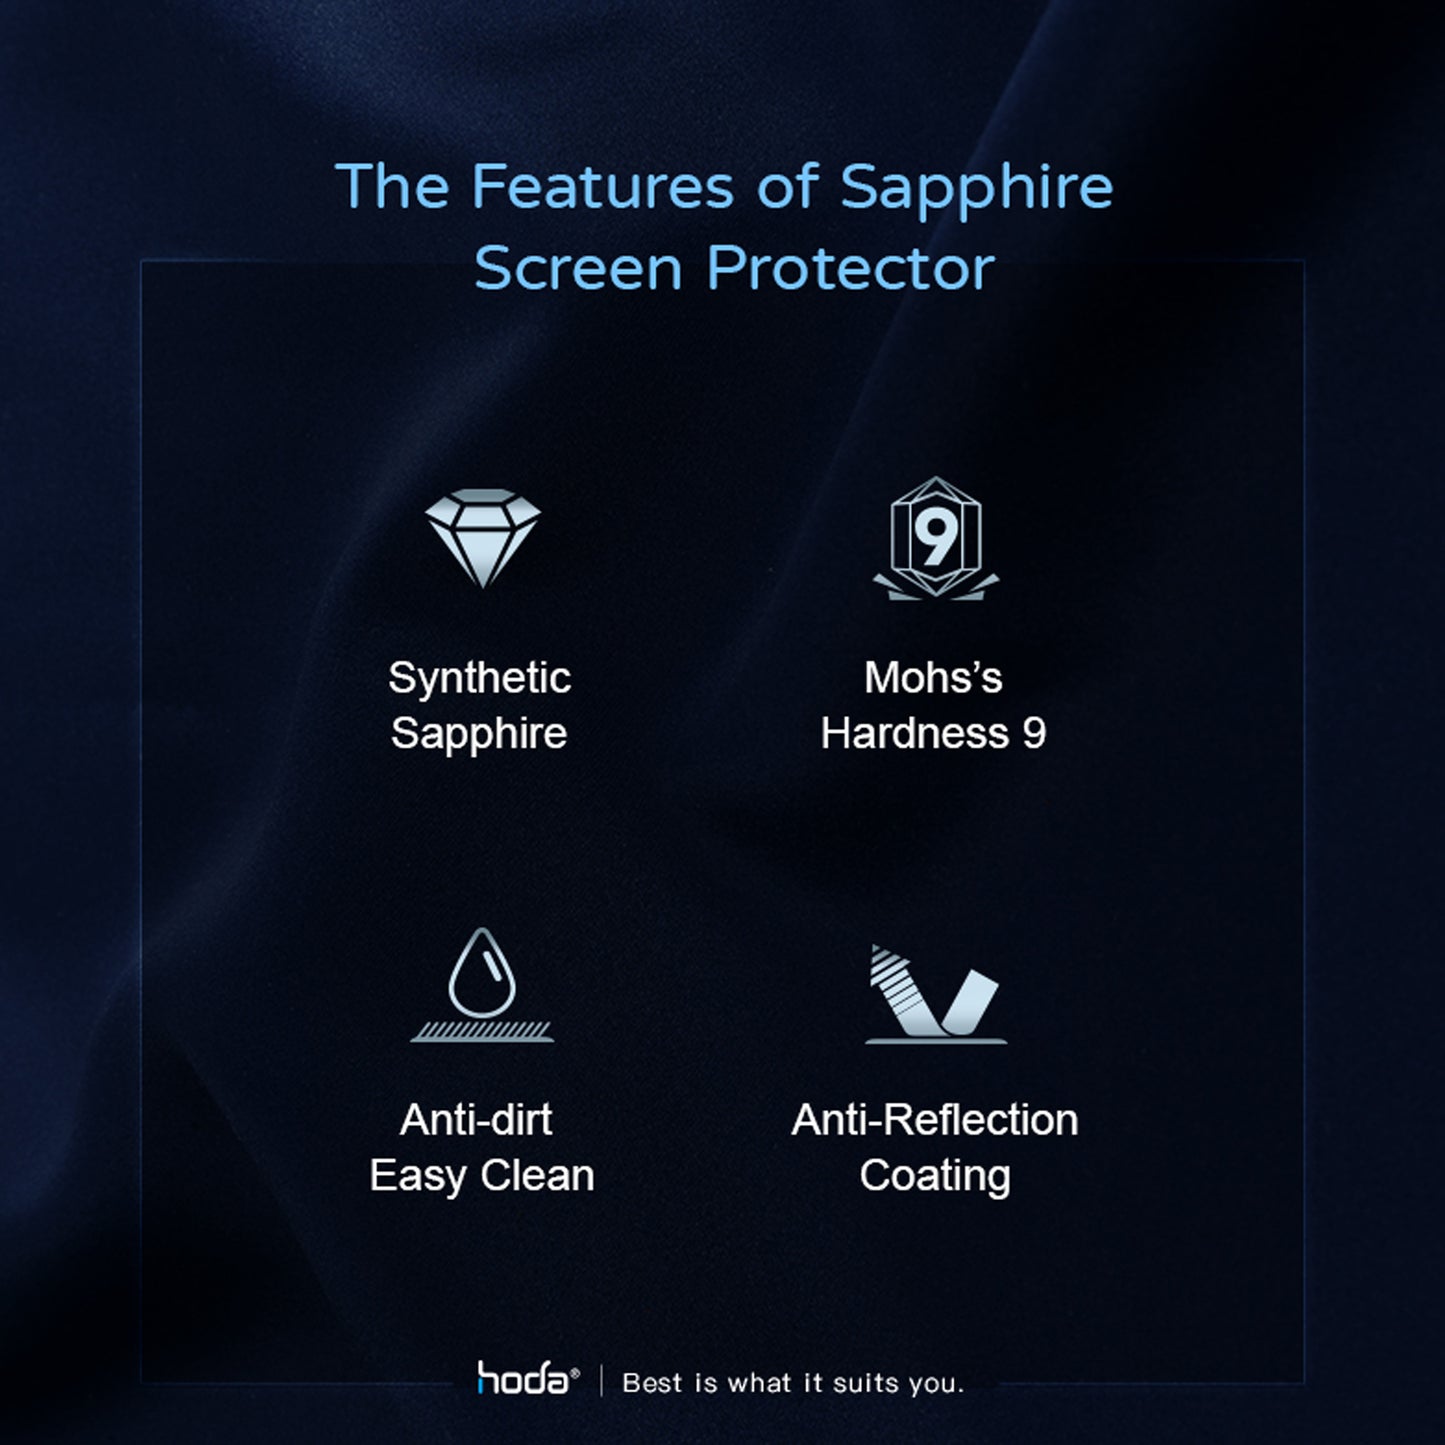 Hoda Sapphire Lens Protector for iPhone 13 Mini - 13 - Blue (2pcs) (Barcode: 4711103542811 )